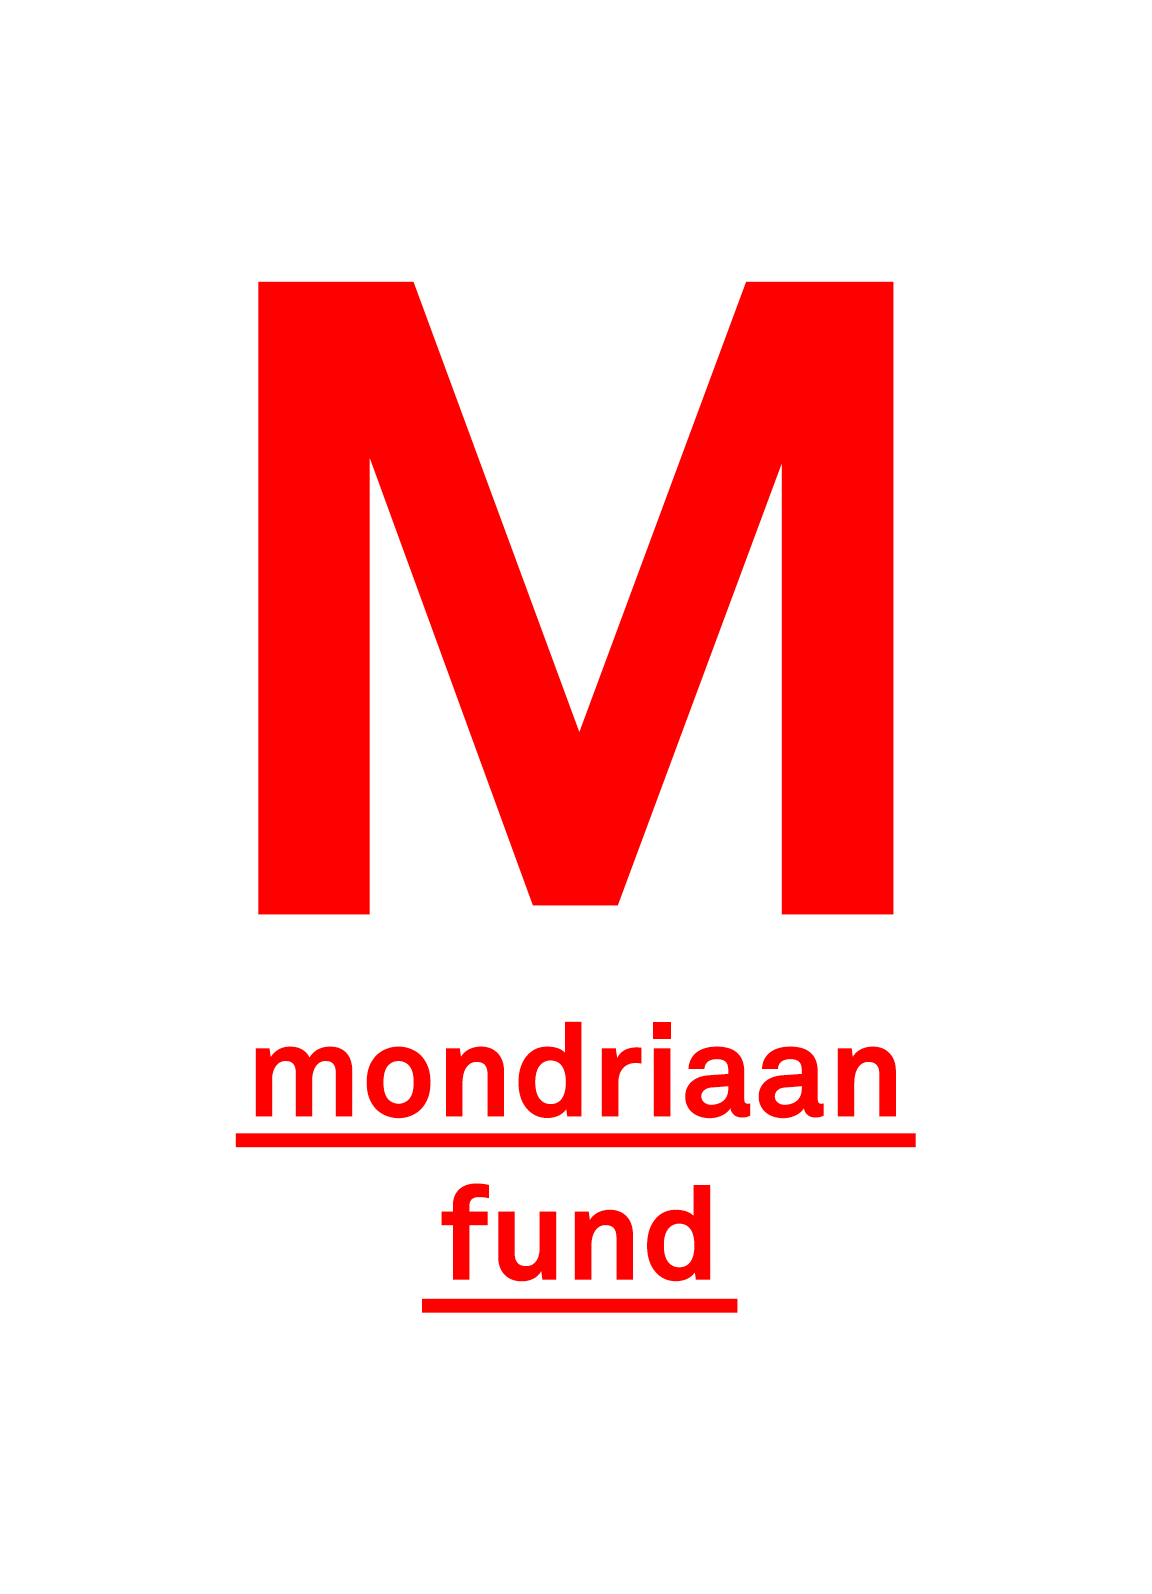 Mondriaan fund